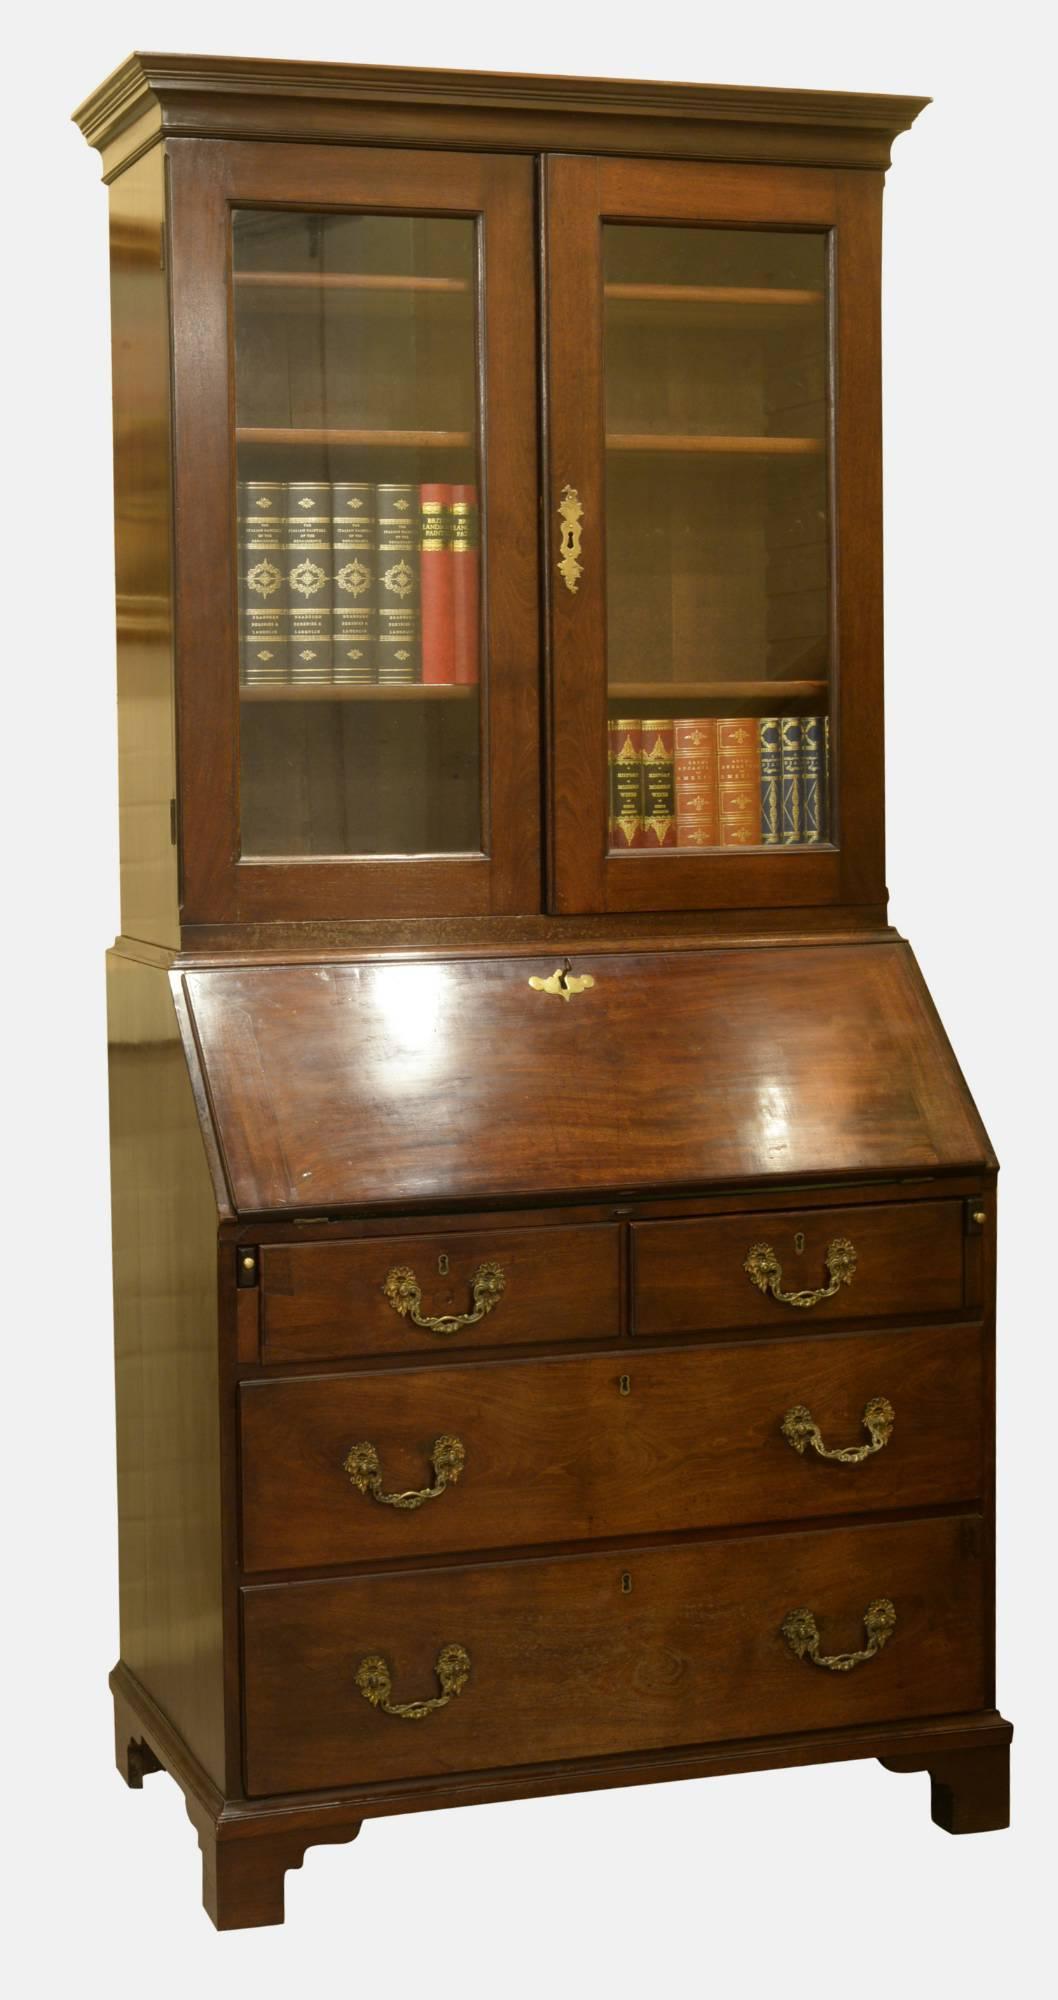 George II Cuban mahogany bureau bookcase,

circa 1750.